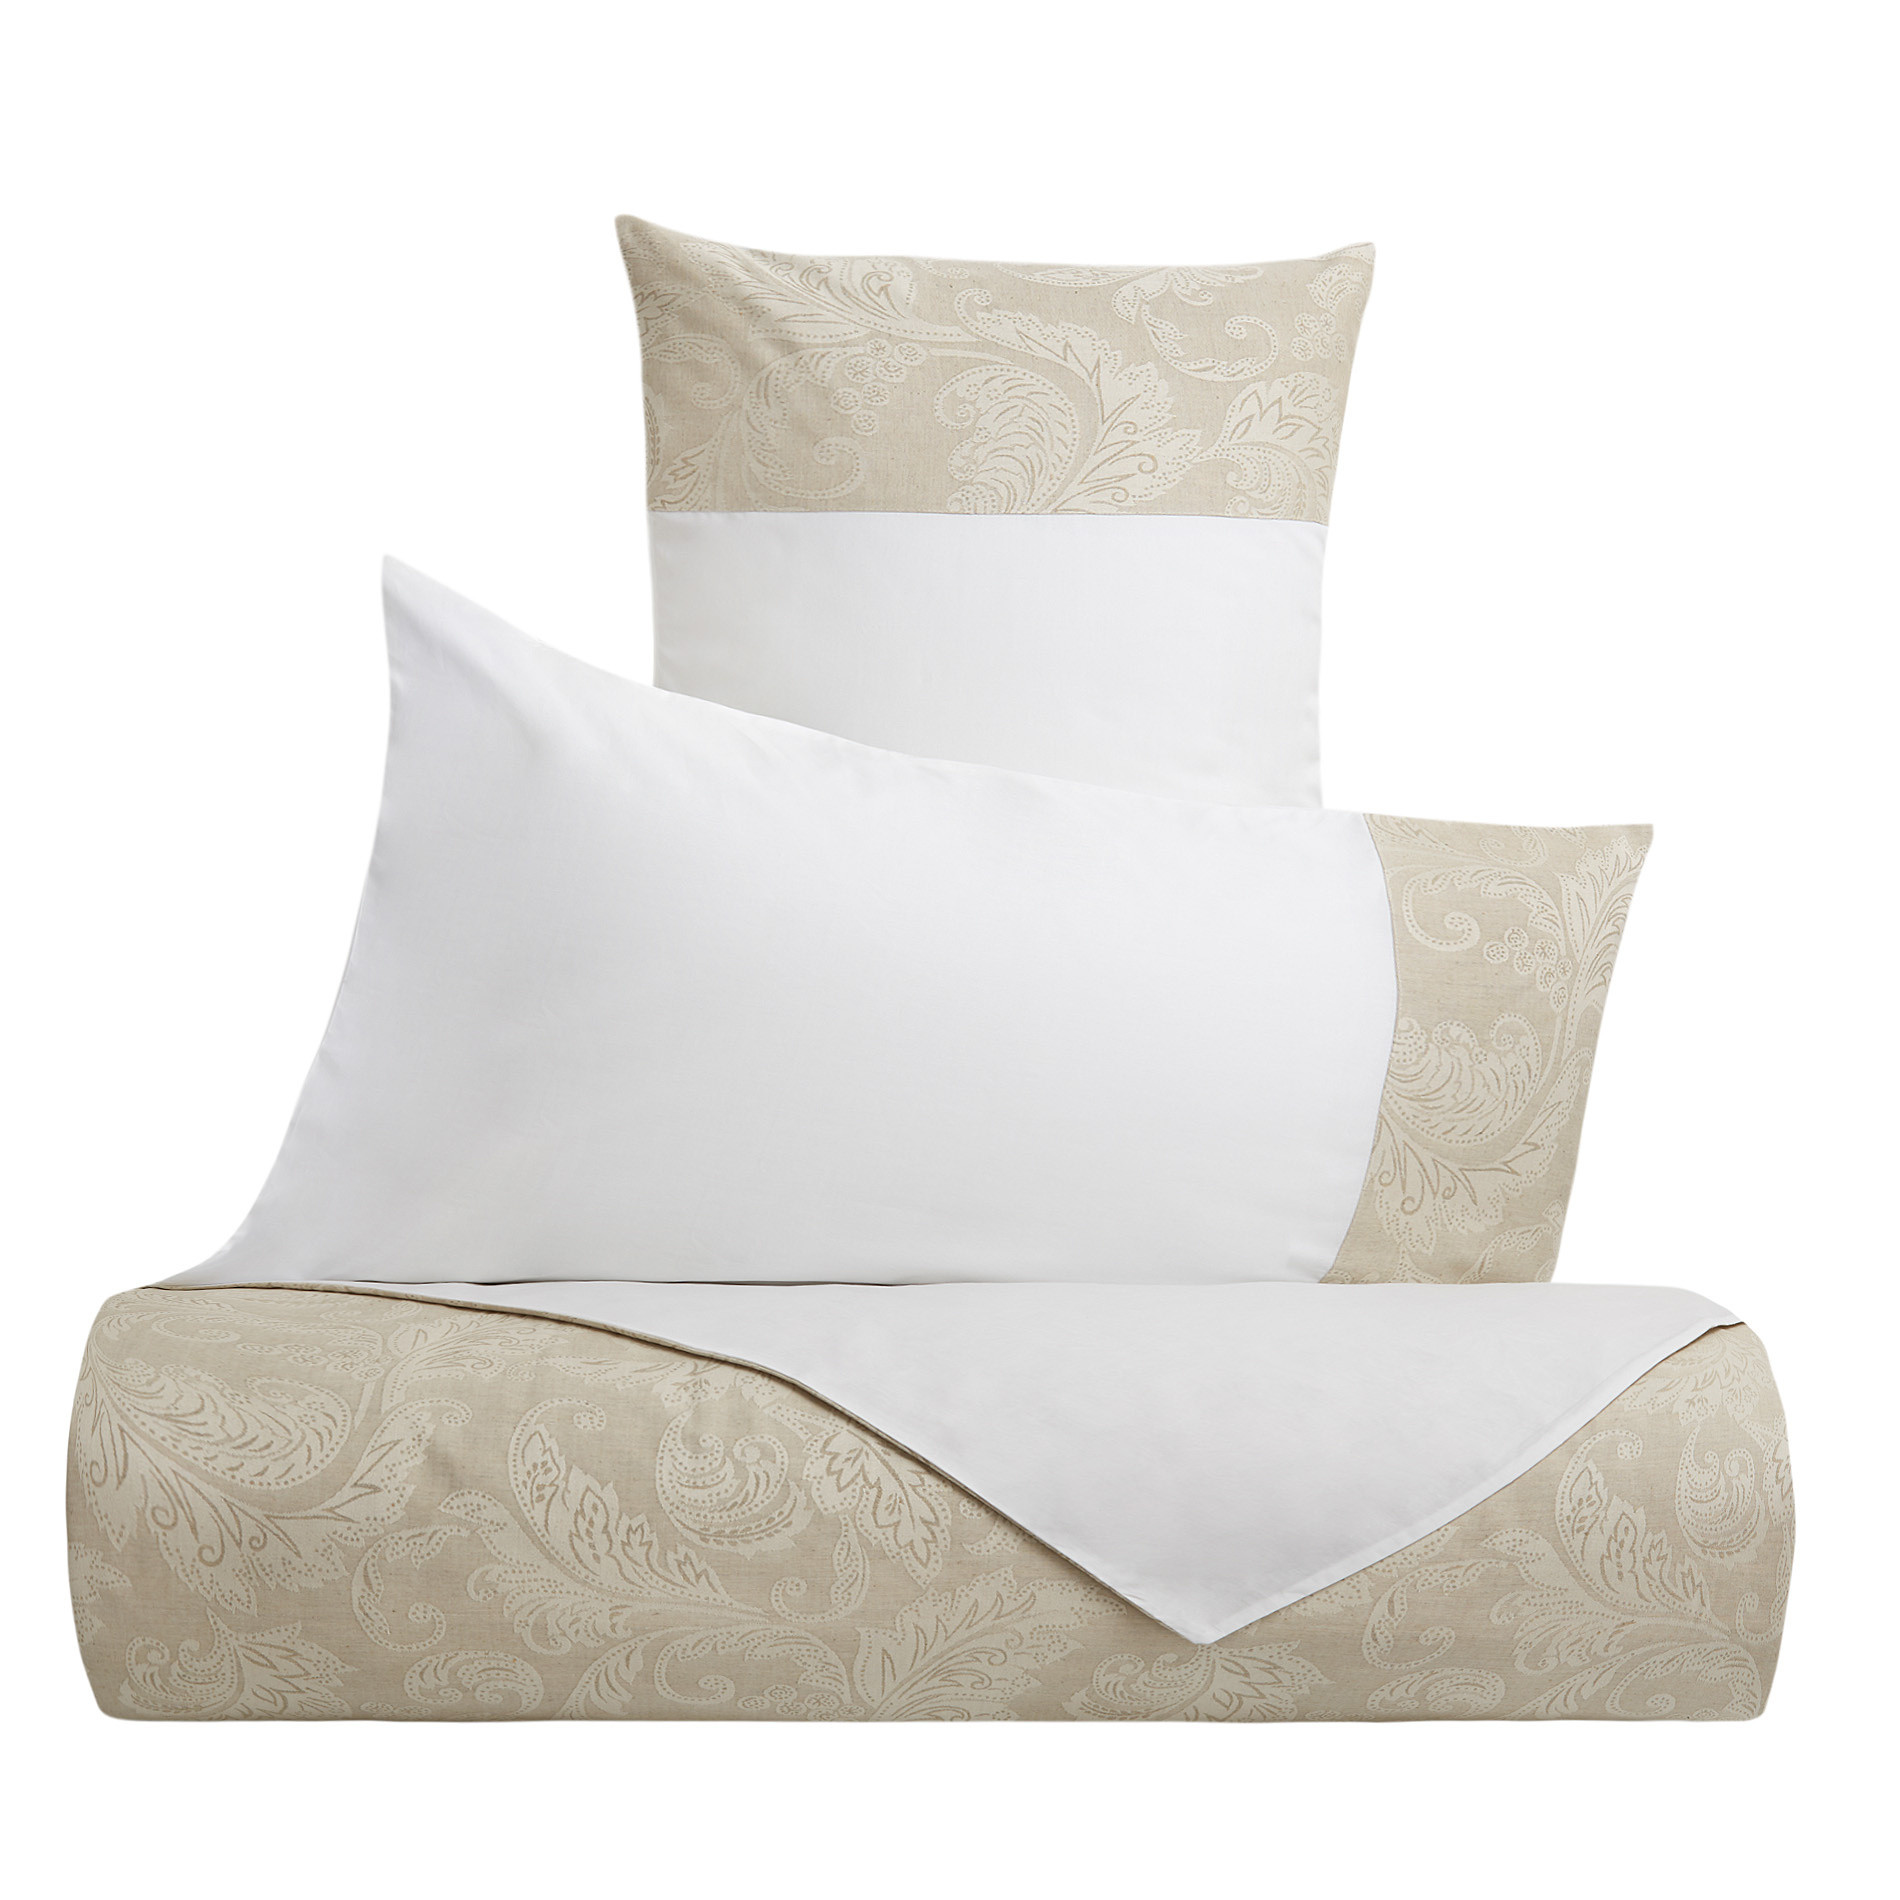 Portofino pillowcase in 100% cotton with linen trim, White, large image number 3